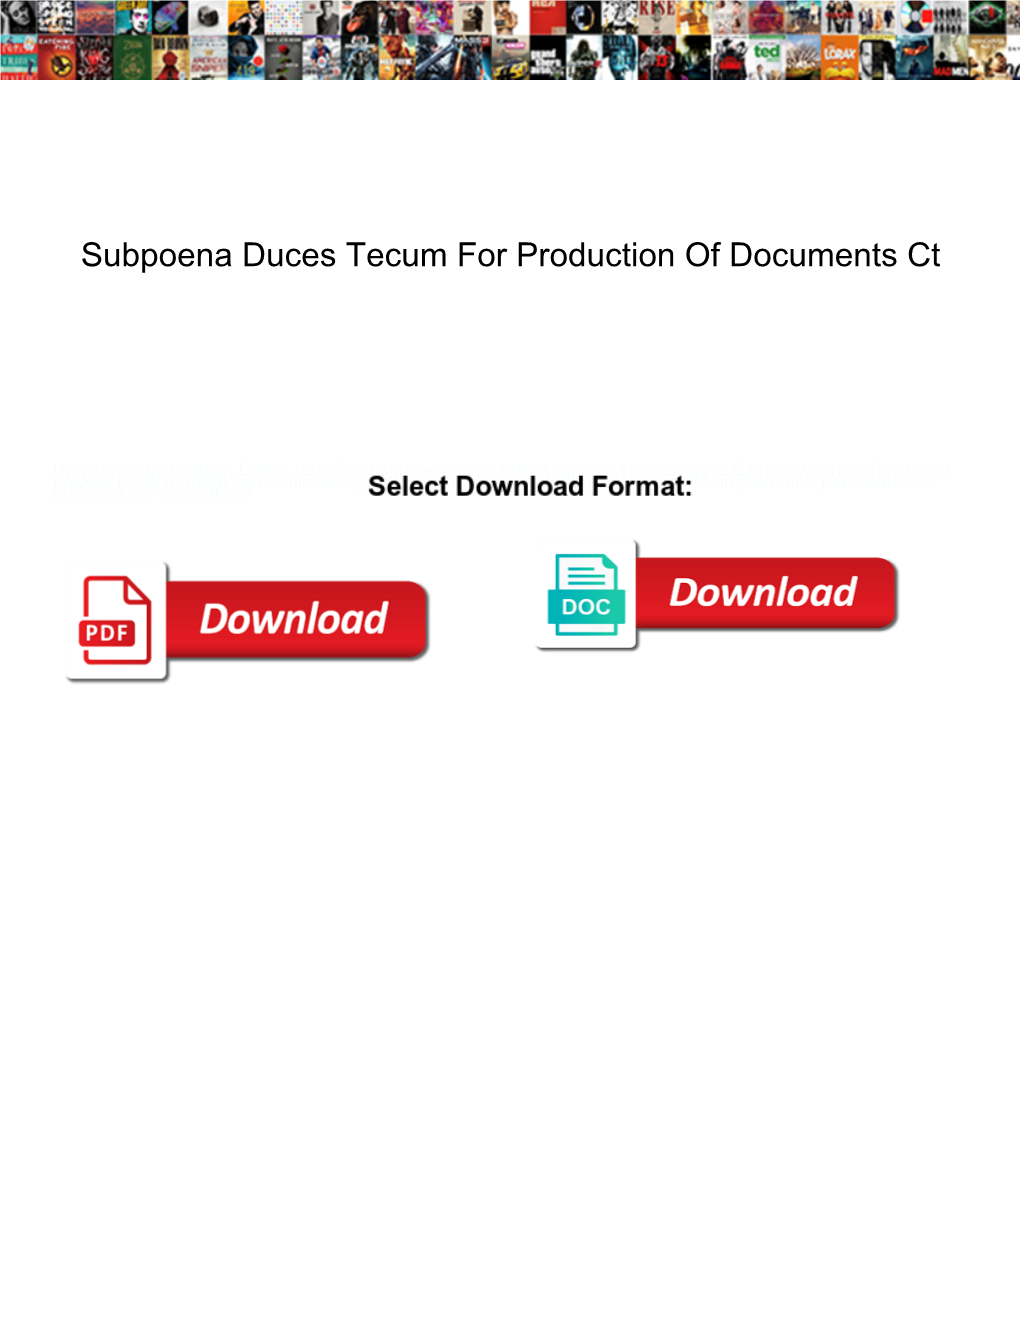 Subpoena Duces Tecum for Production of Documents Ct